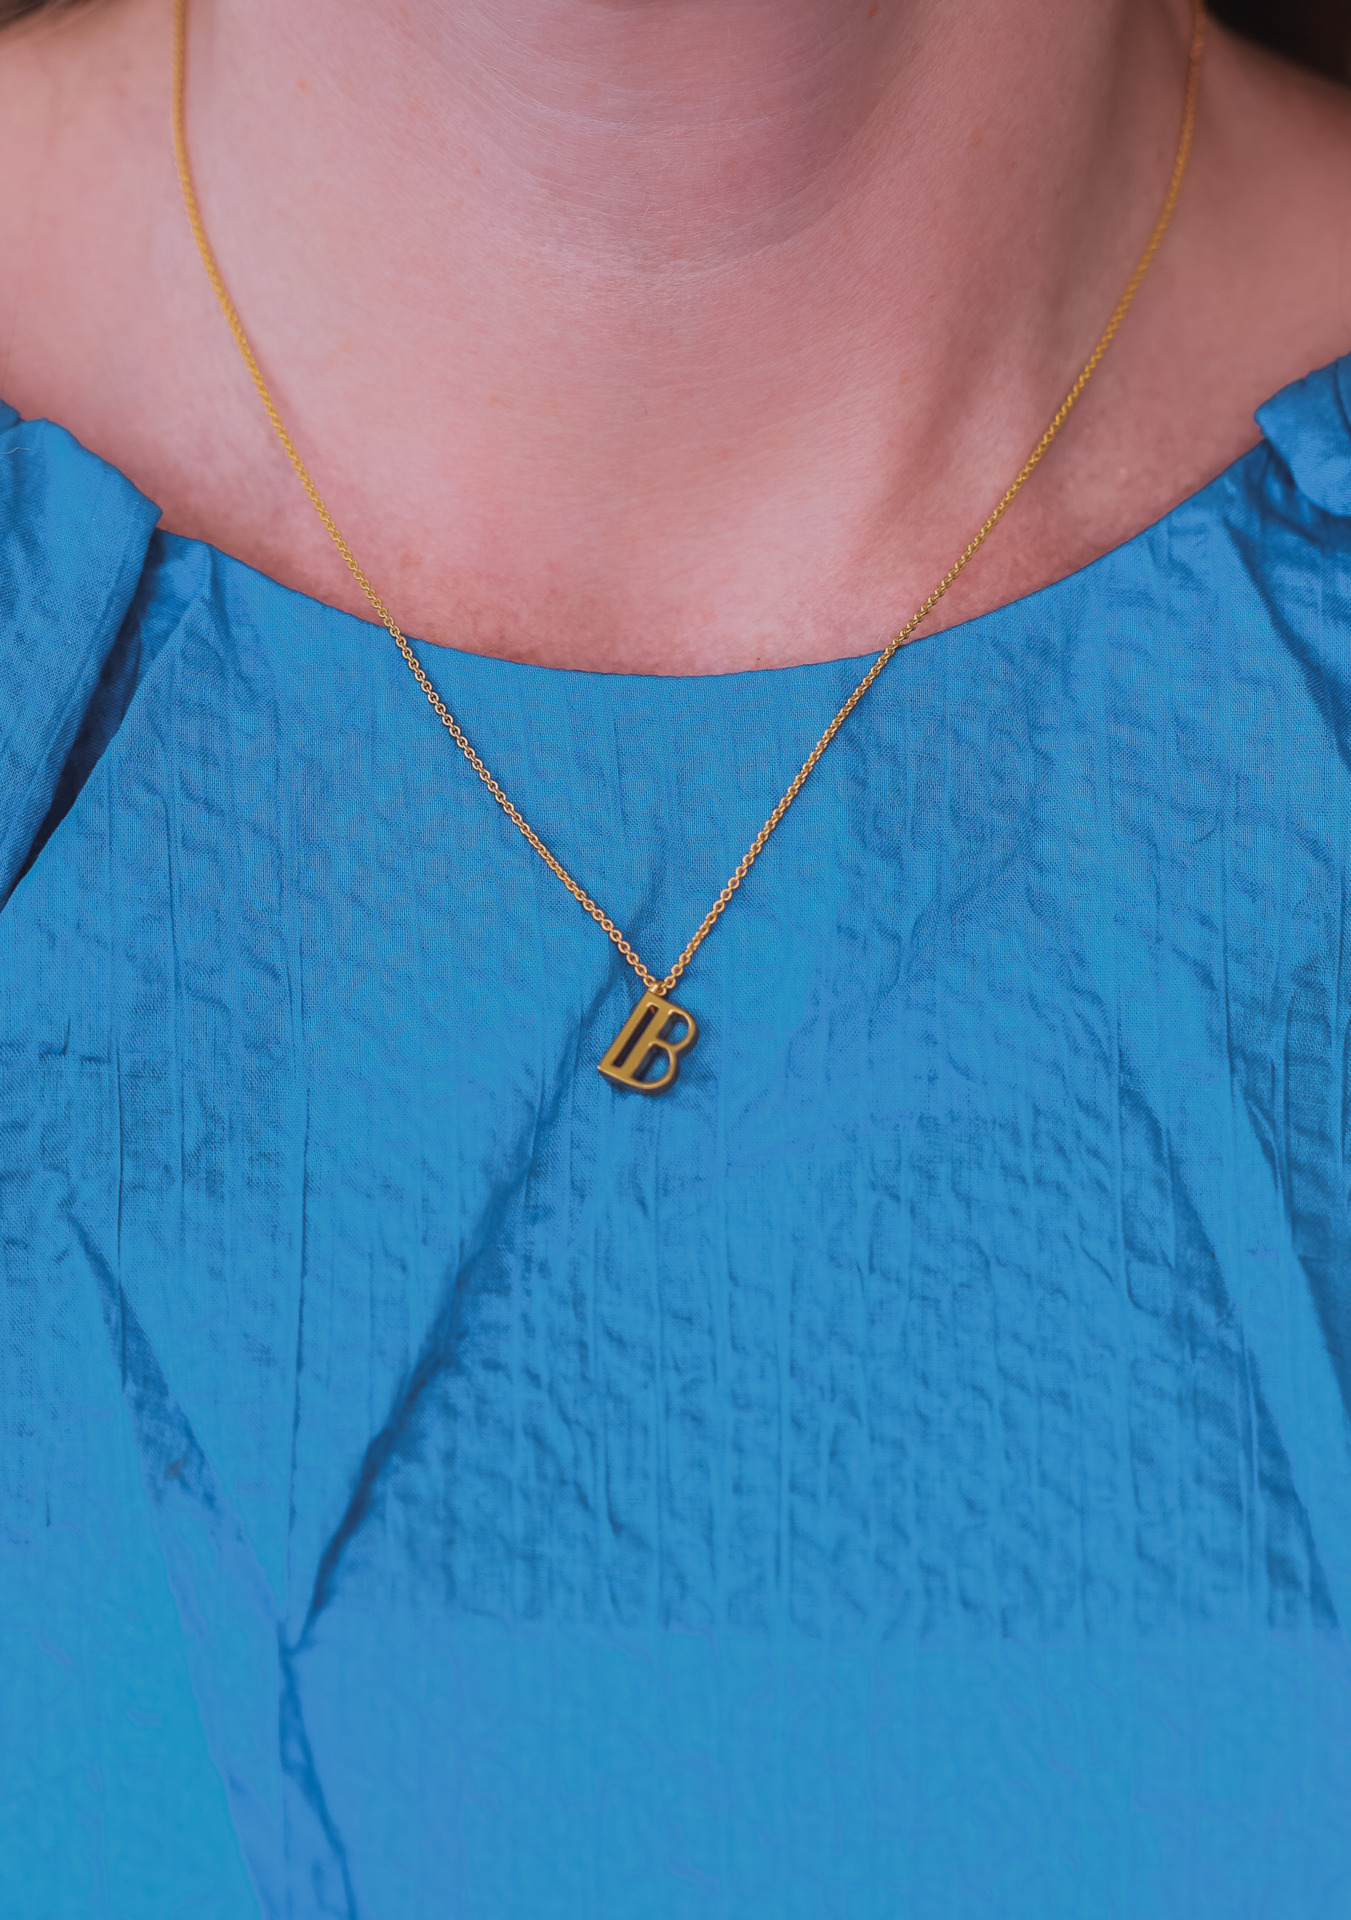 initial B pendant necklace